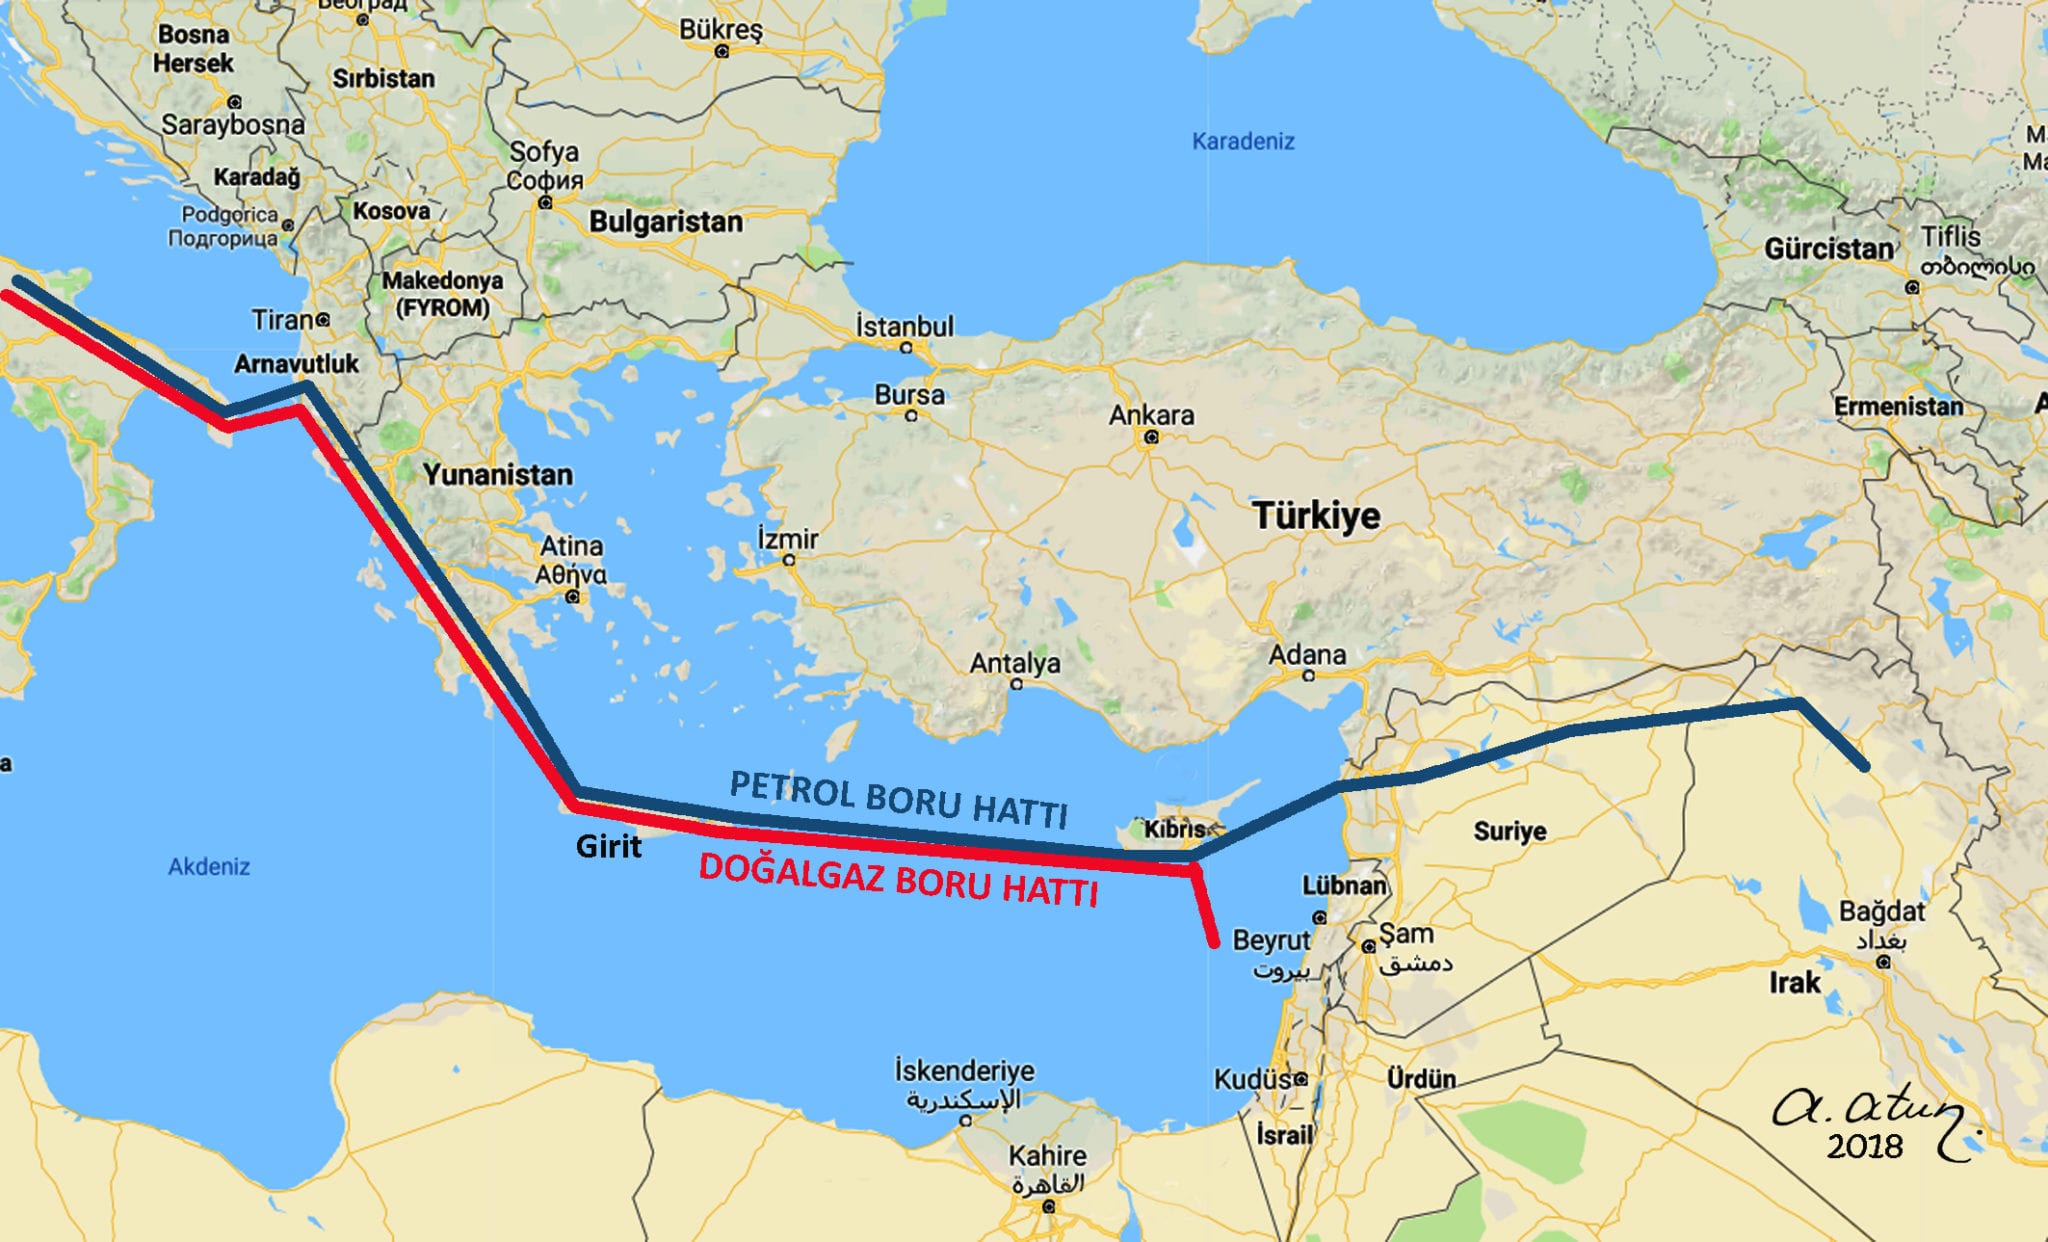 U.S. warns Turkey over offshore drilling near Cyprus